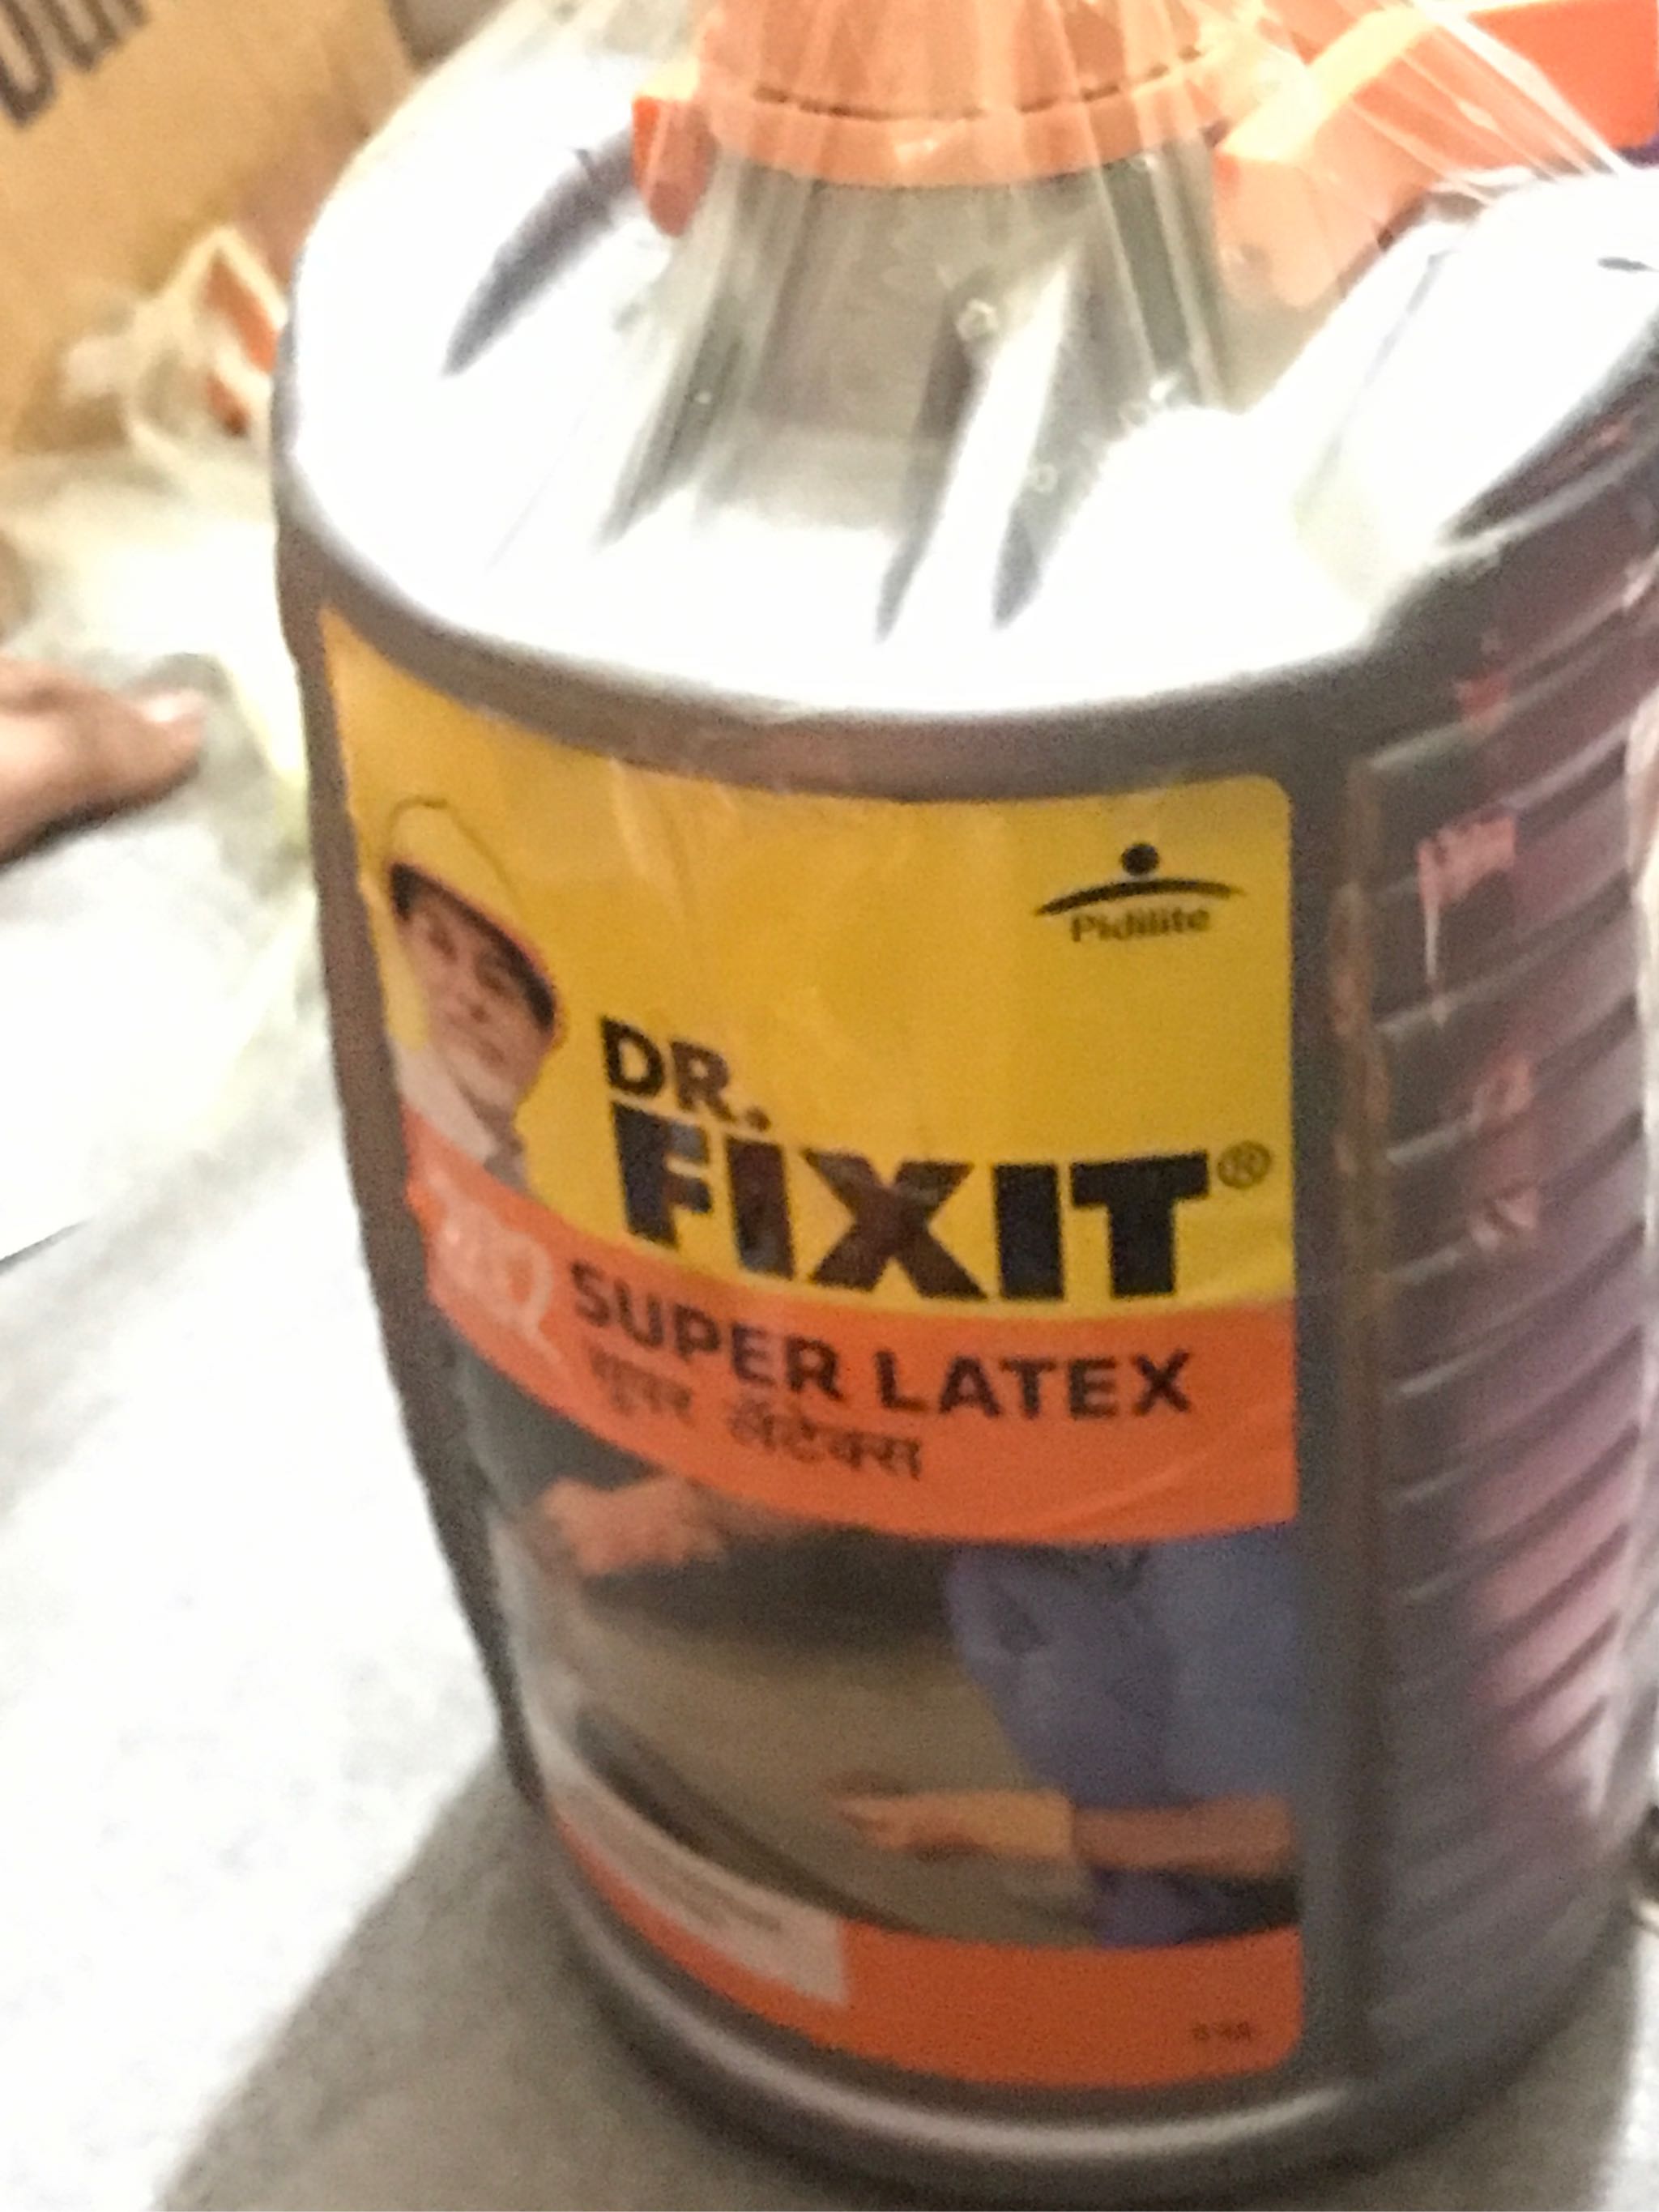 Super Latex